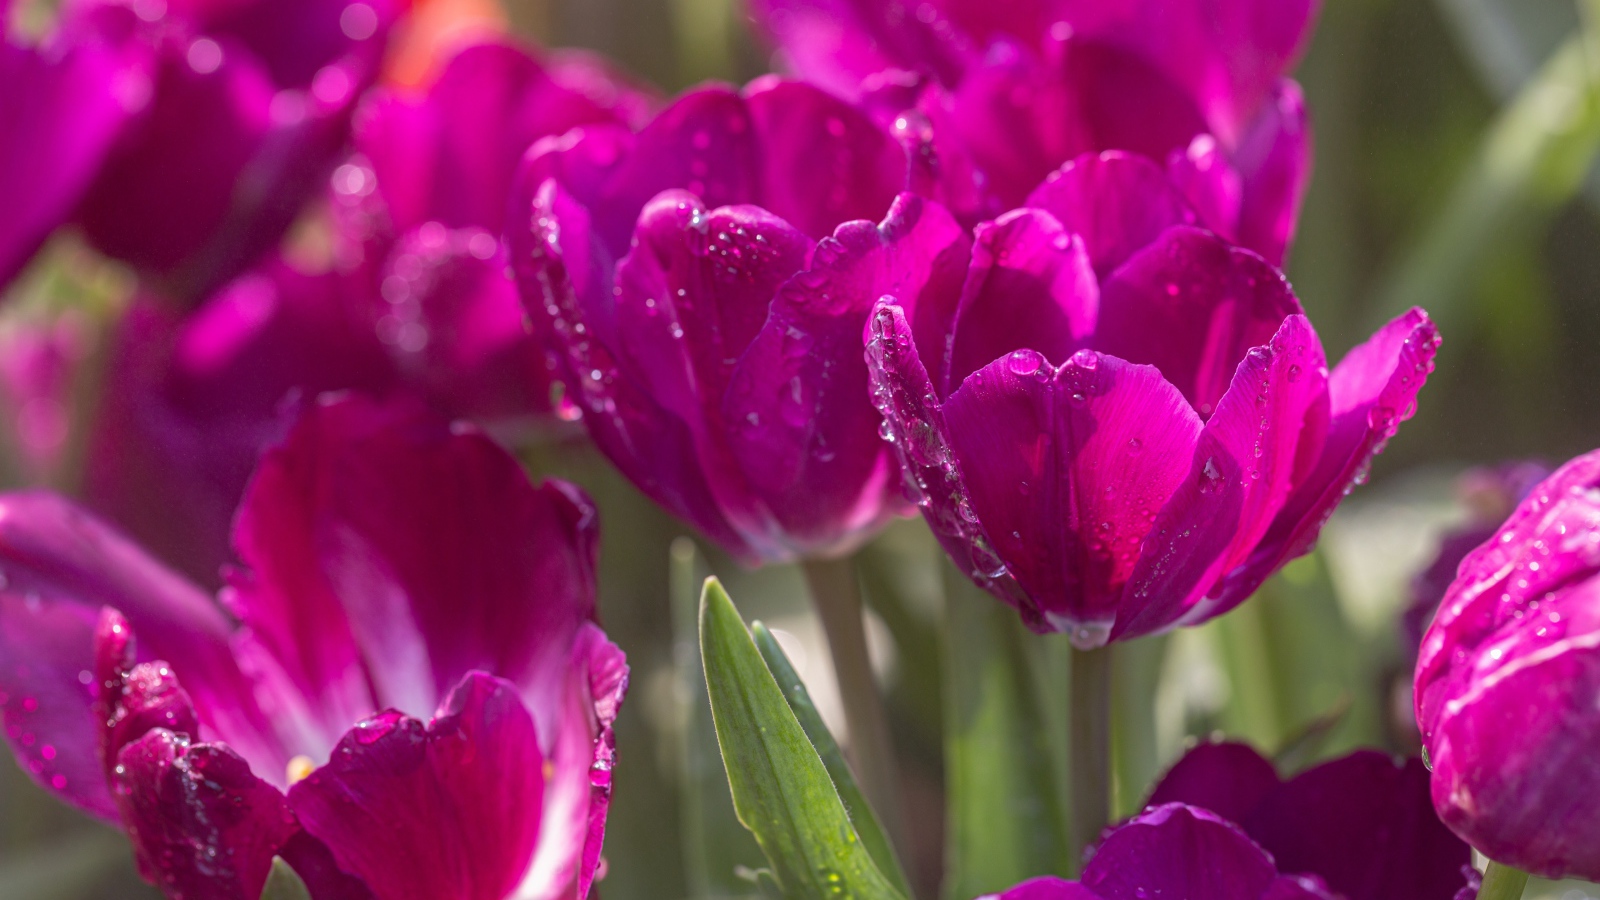 Purple tulips in dewdrops in the sun